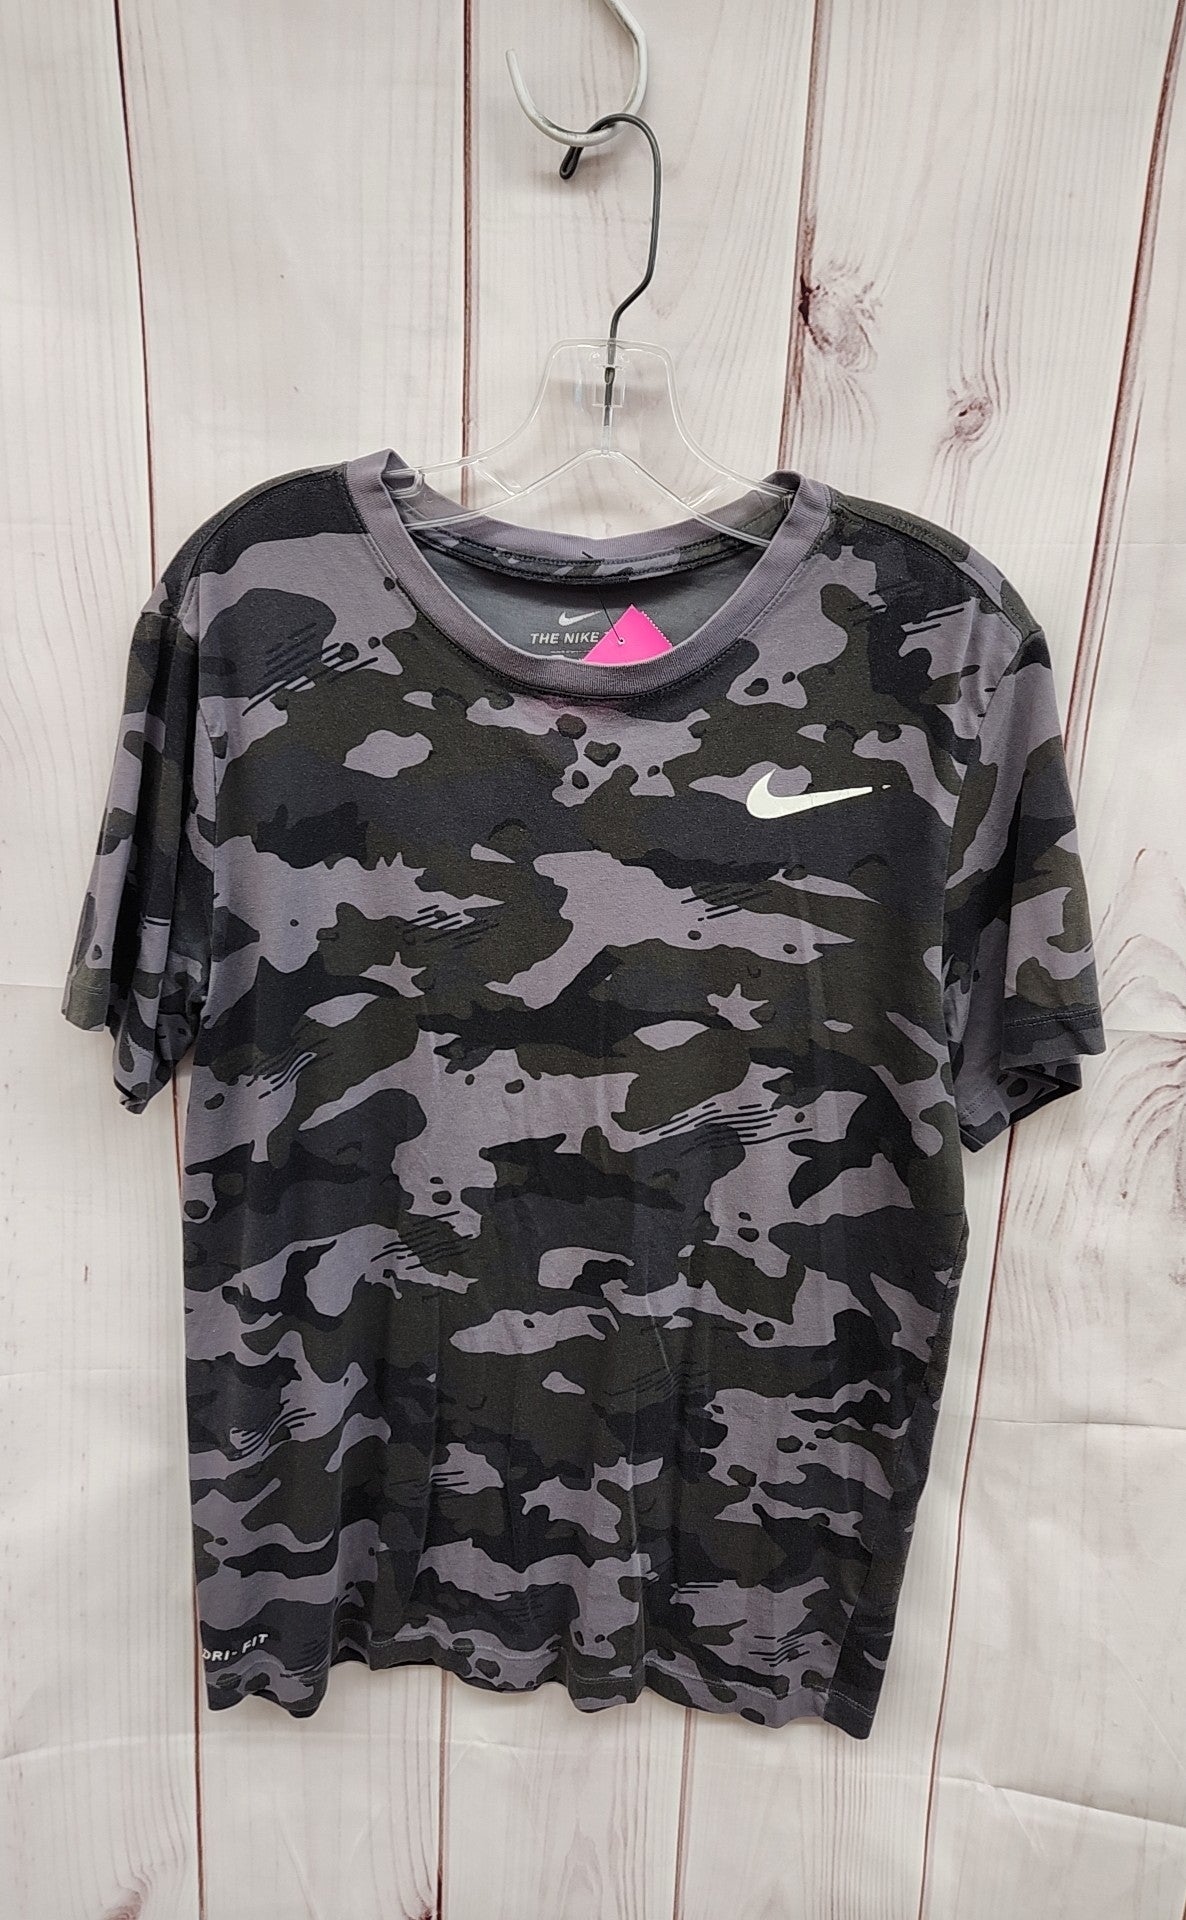 Nike Men's Size M Gray Shirt